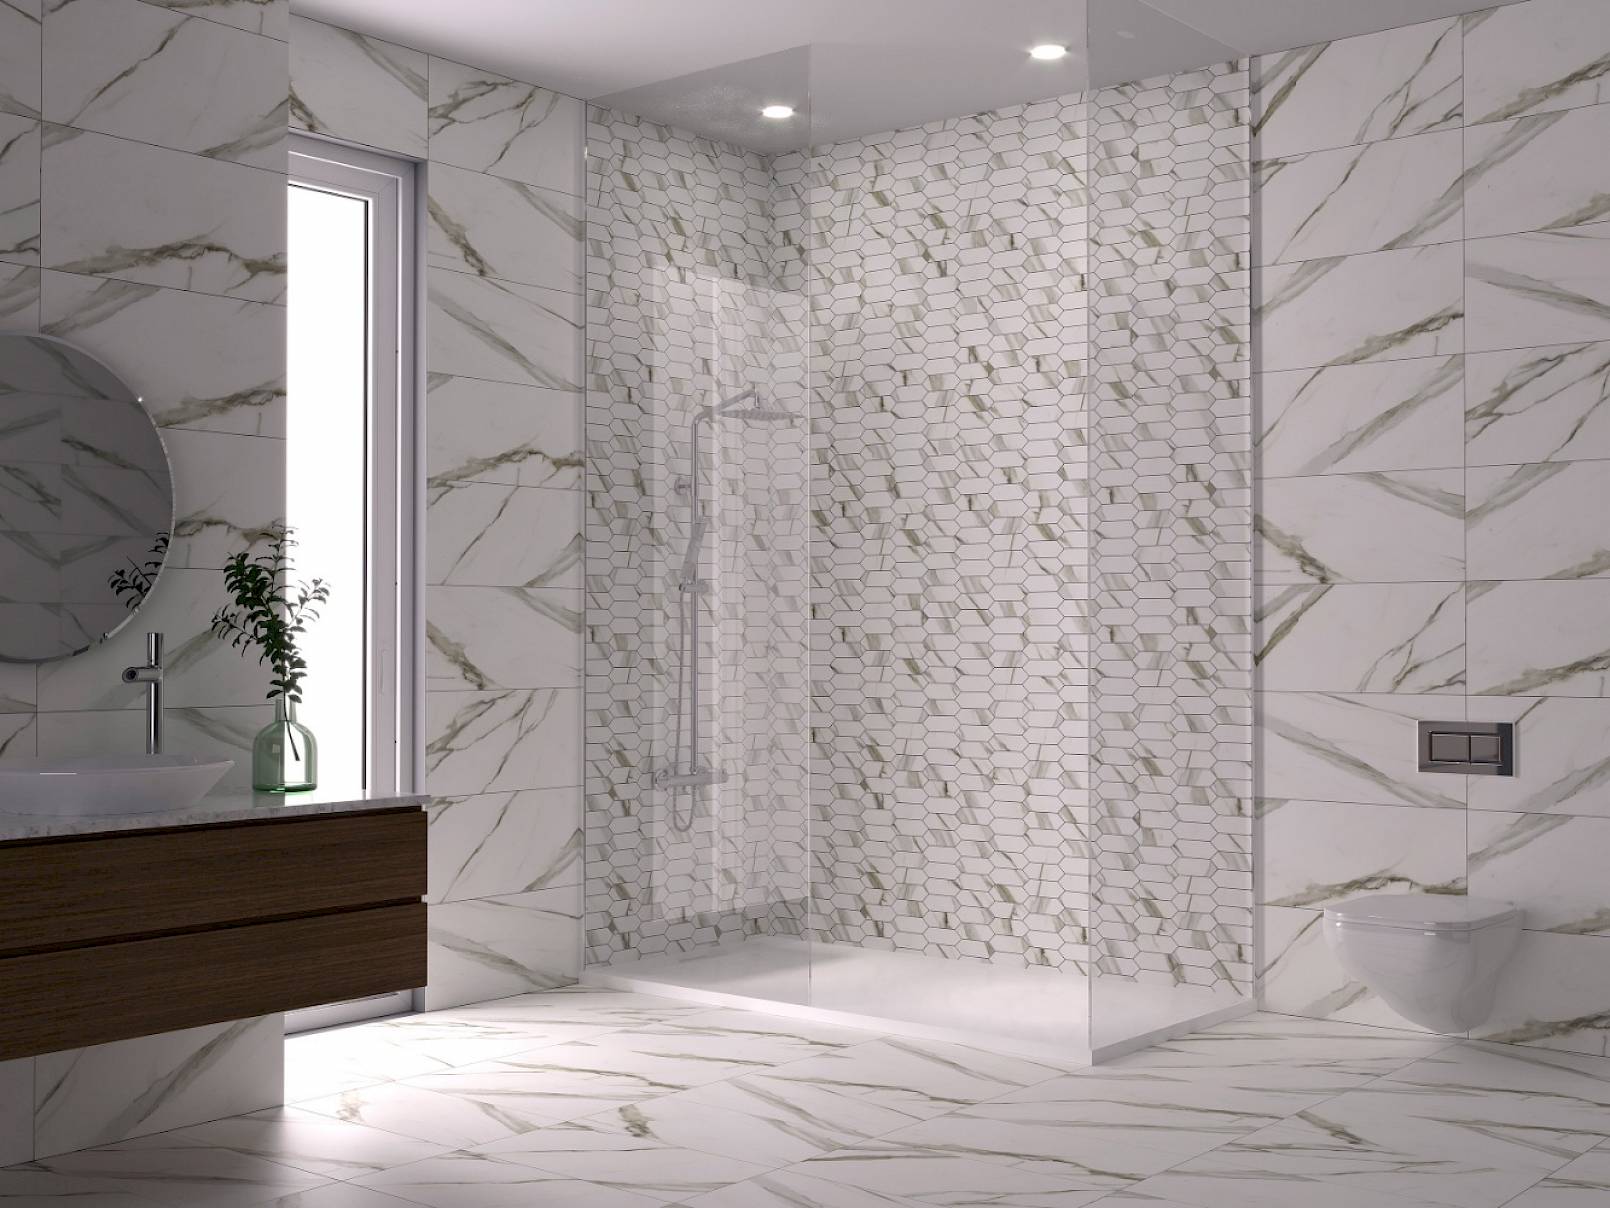 Tiled shower and bathroom Centura Tile